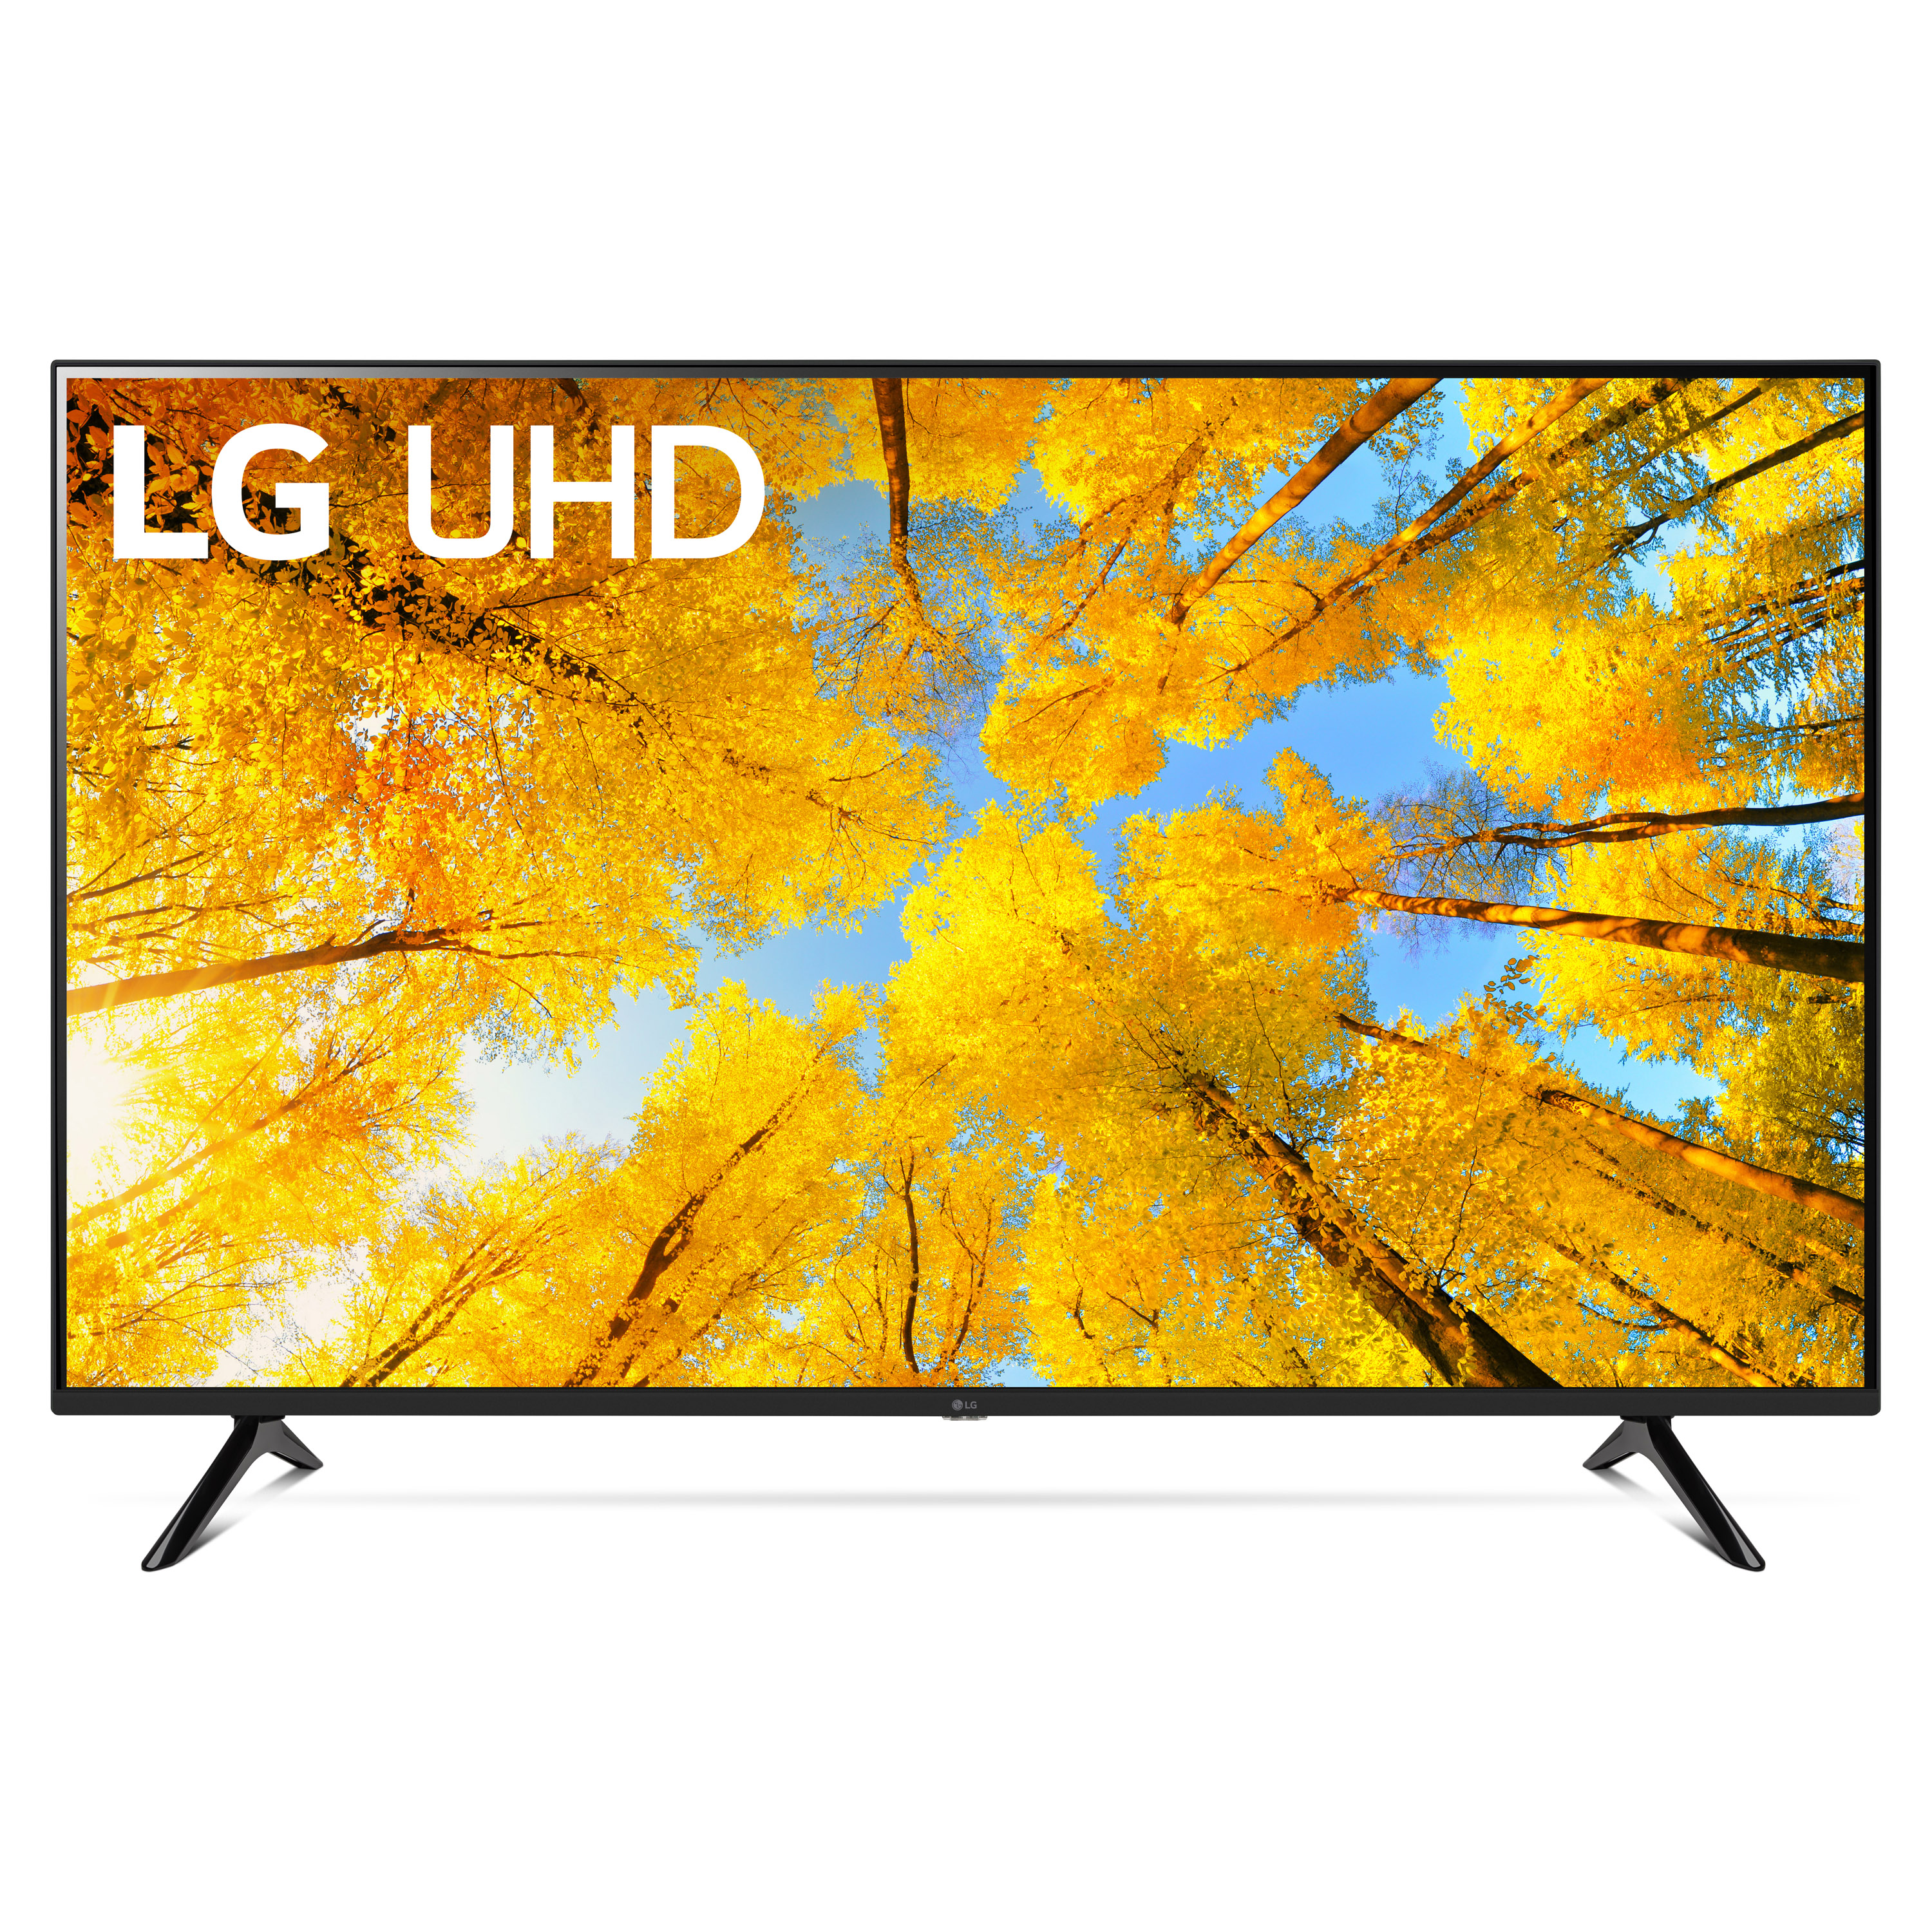 LG 50" Class 4K UHD 2160P WebOS Smart TV with Active HDR UQ7570 Series 50UQ7570PUJ - image 1 of 16